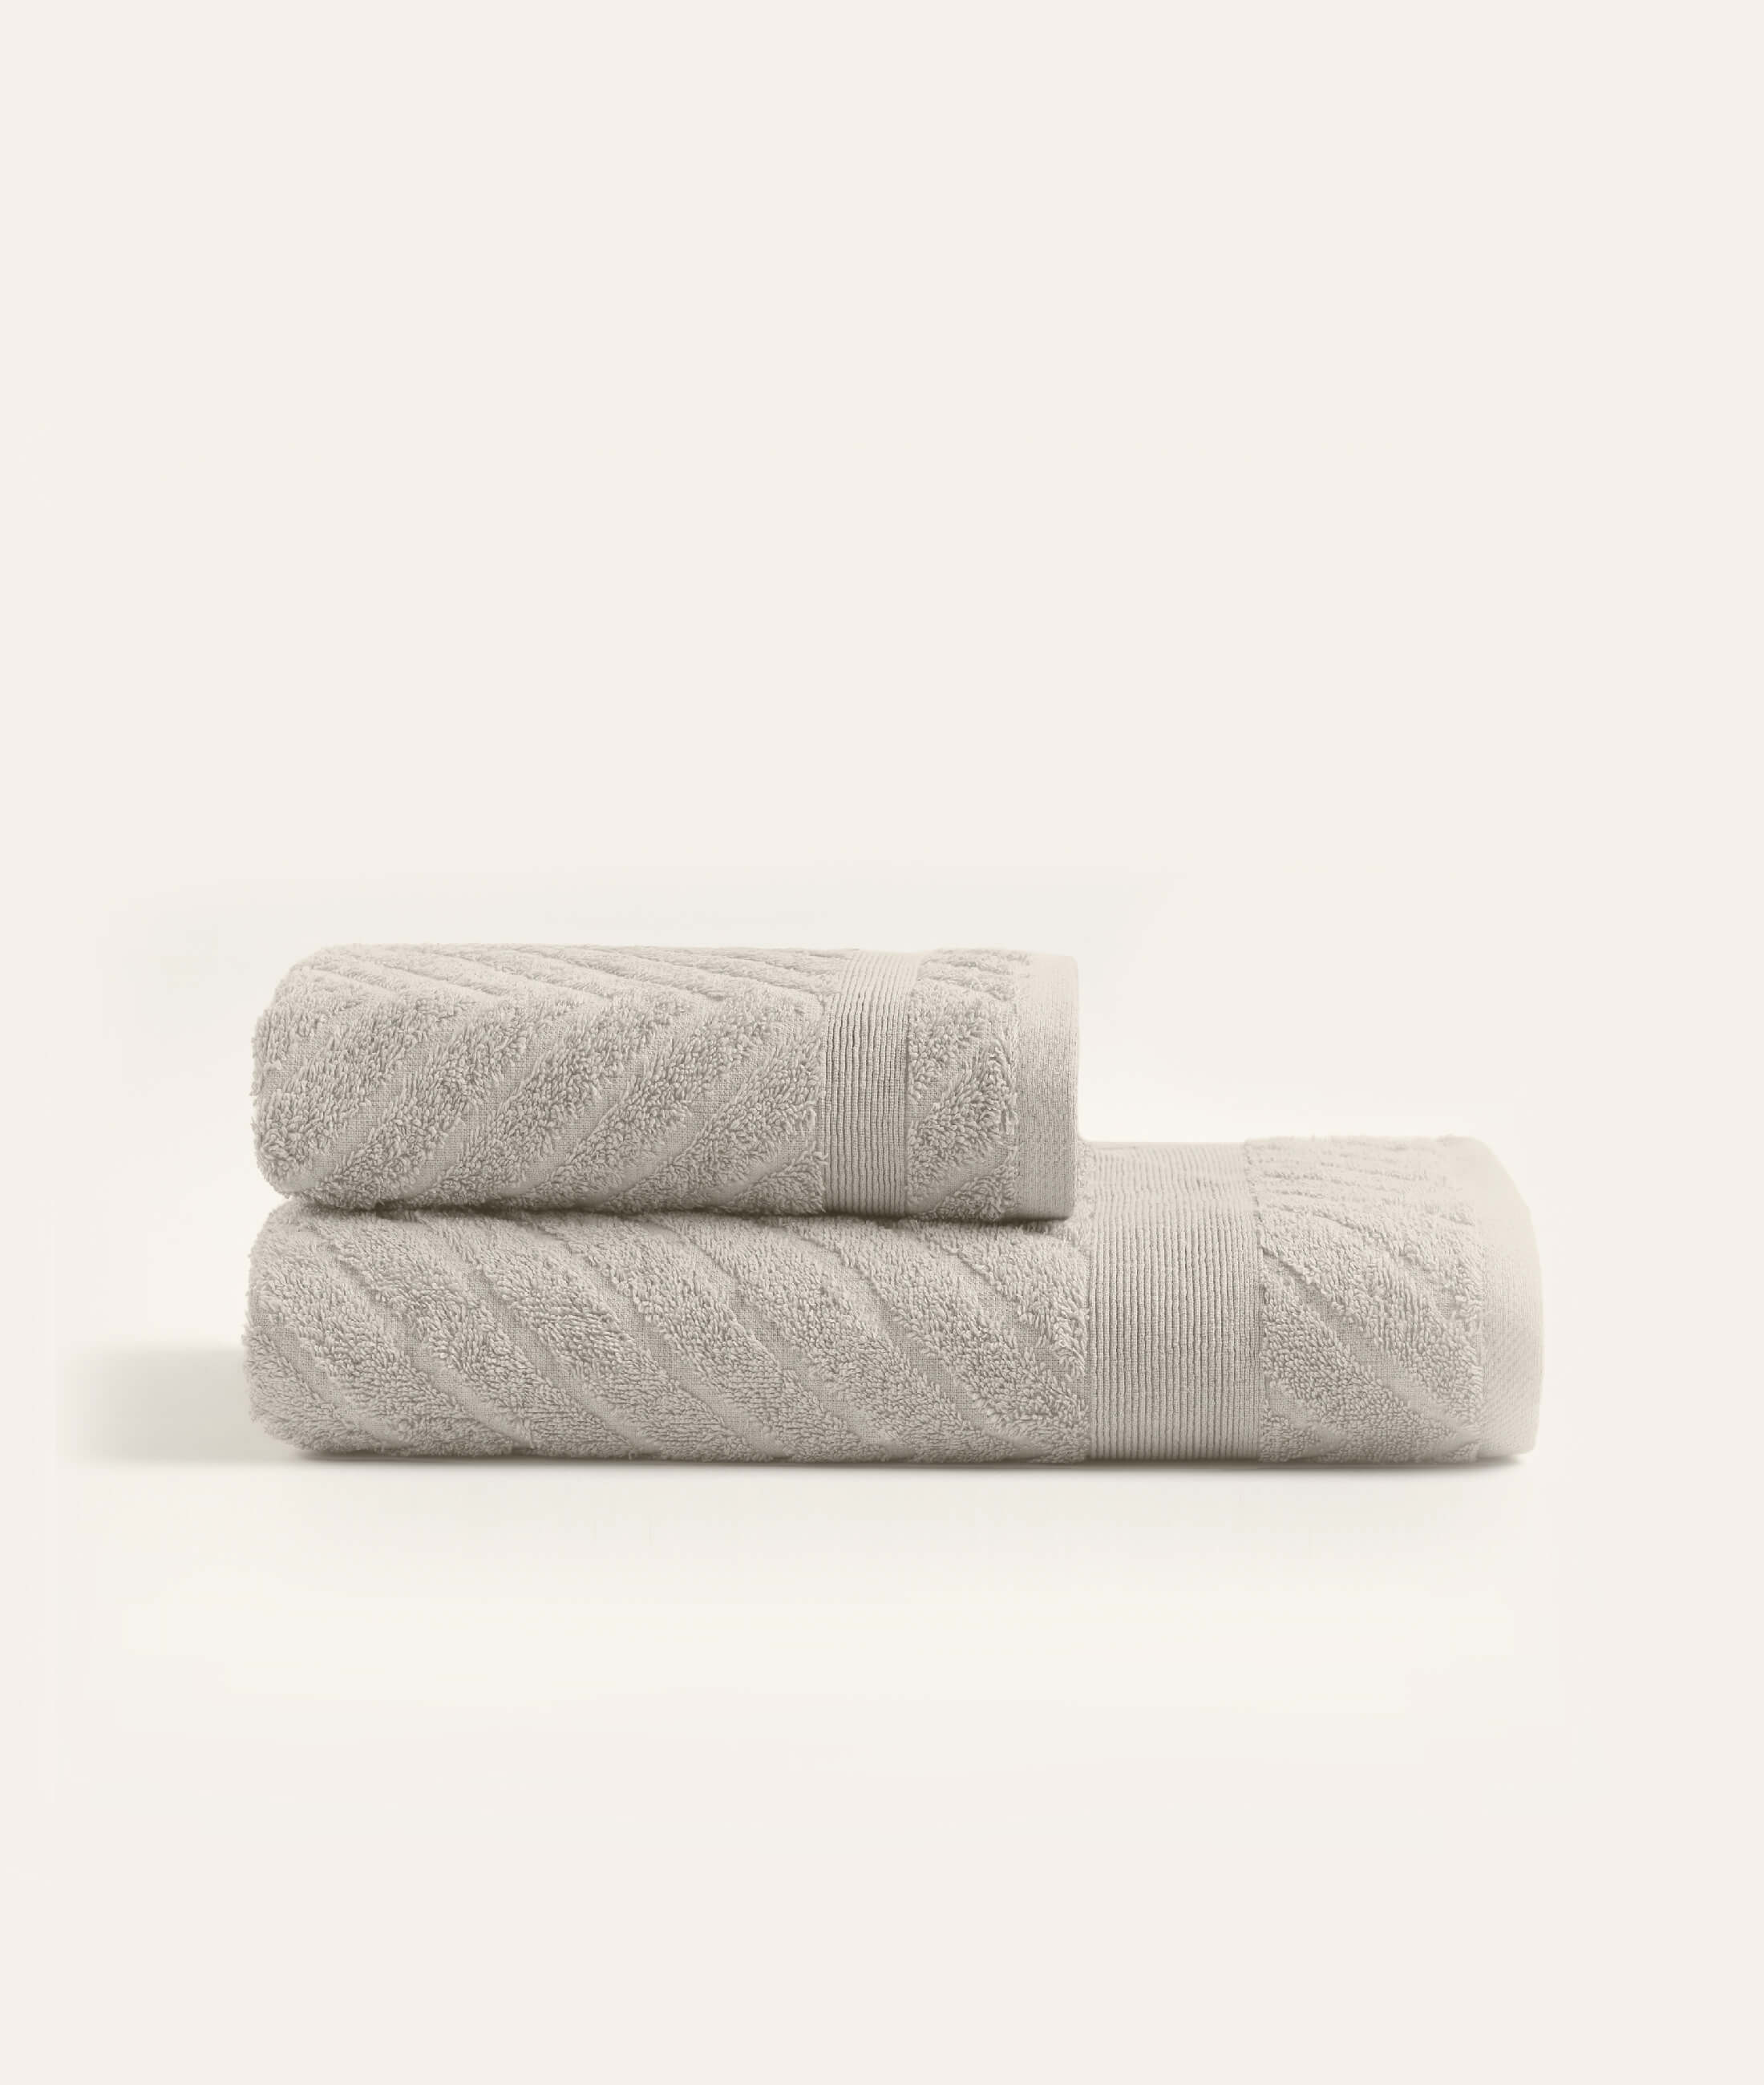 Lycian Jacquard Border Mink 2-Piece Towel Set Herringbone 1027A